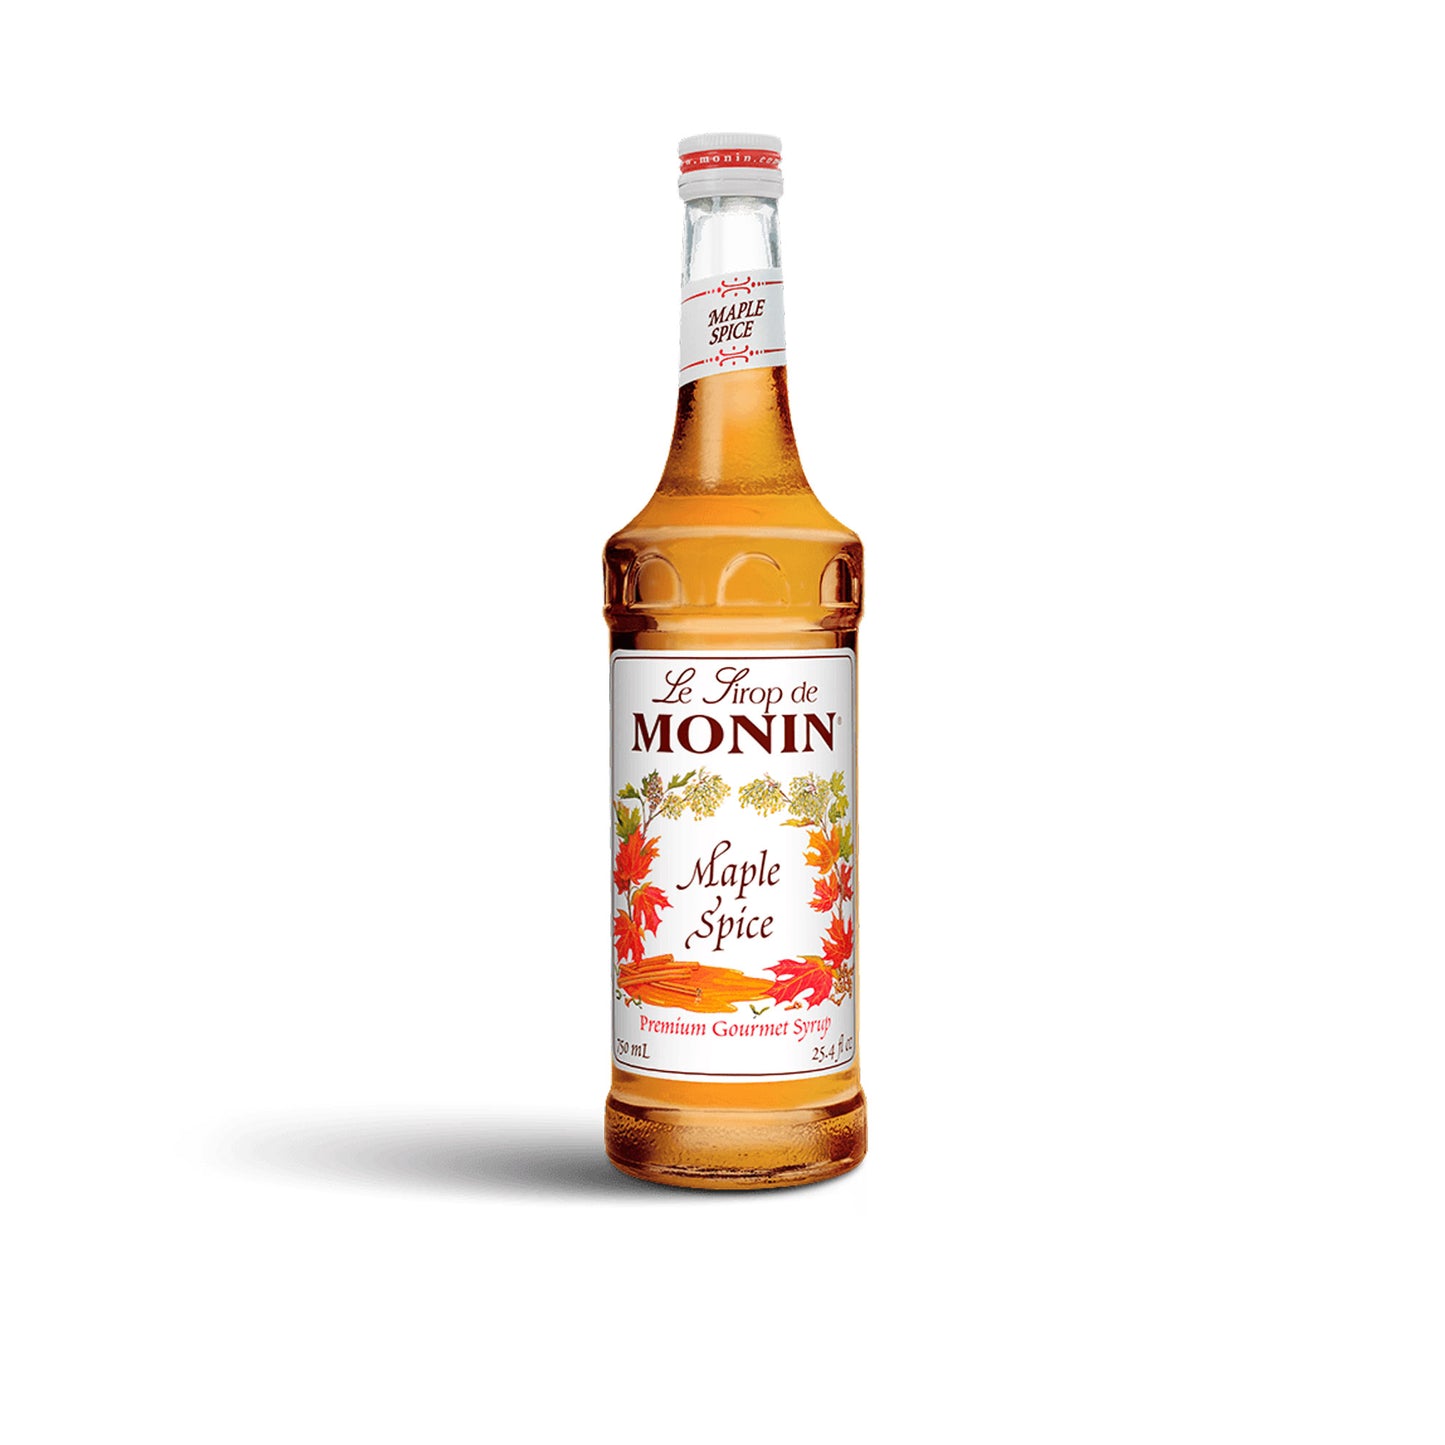 Maple Spice Monin Syrup